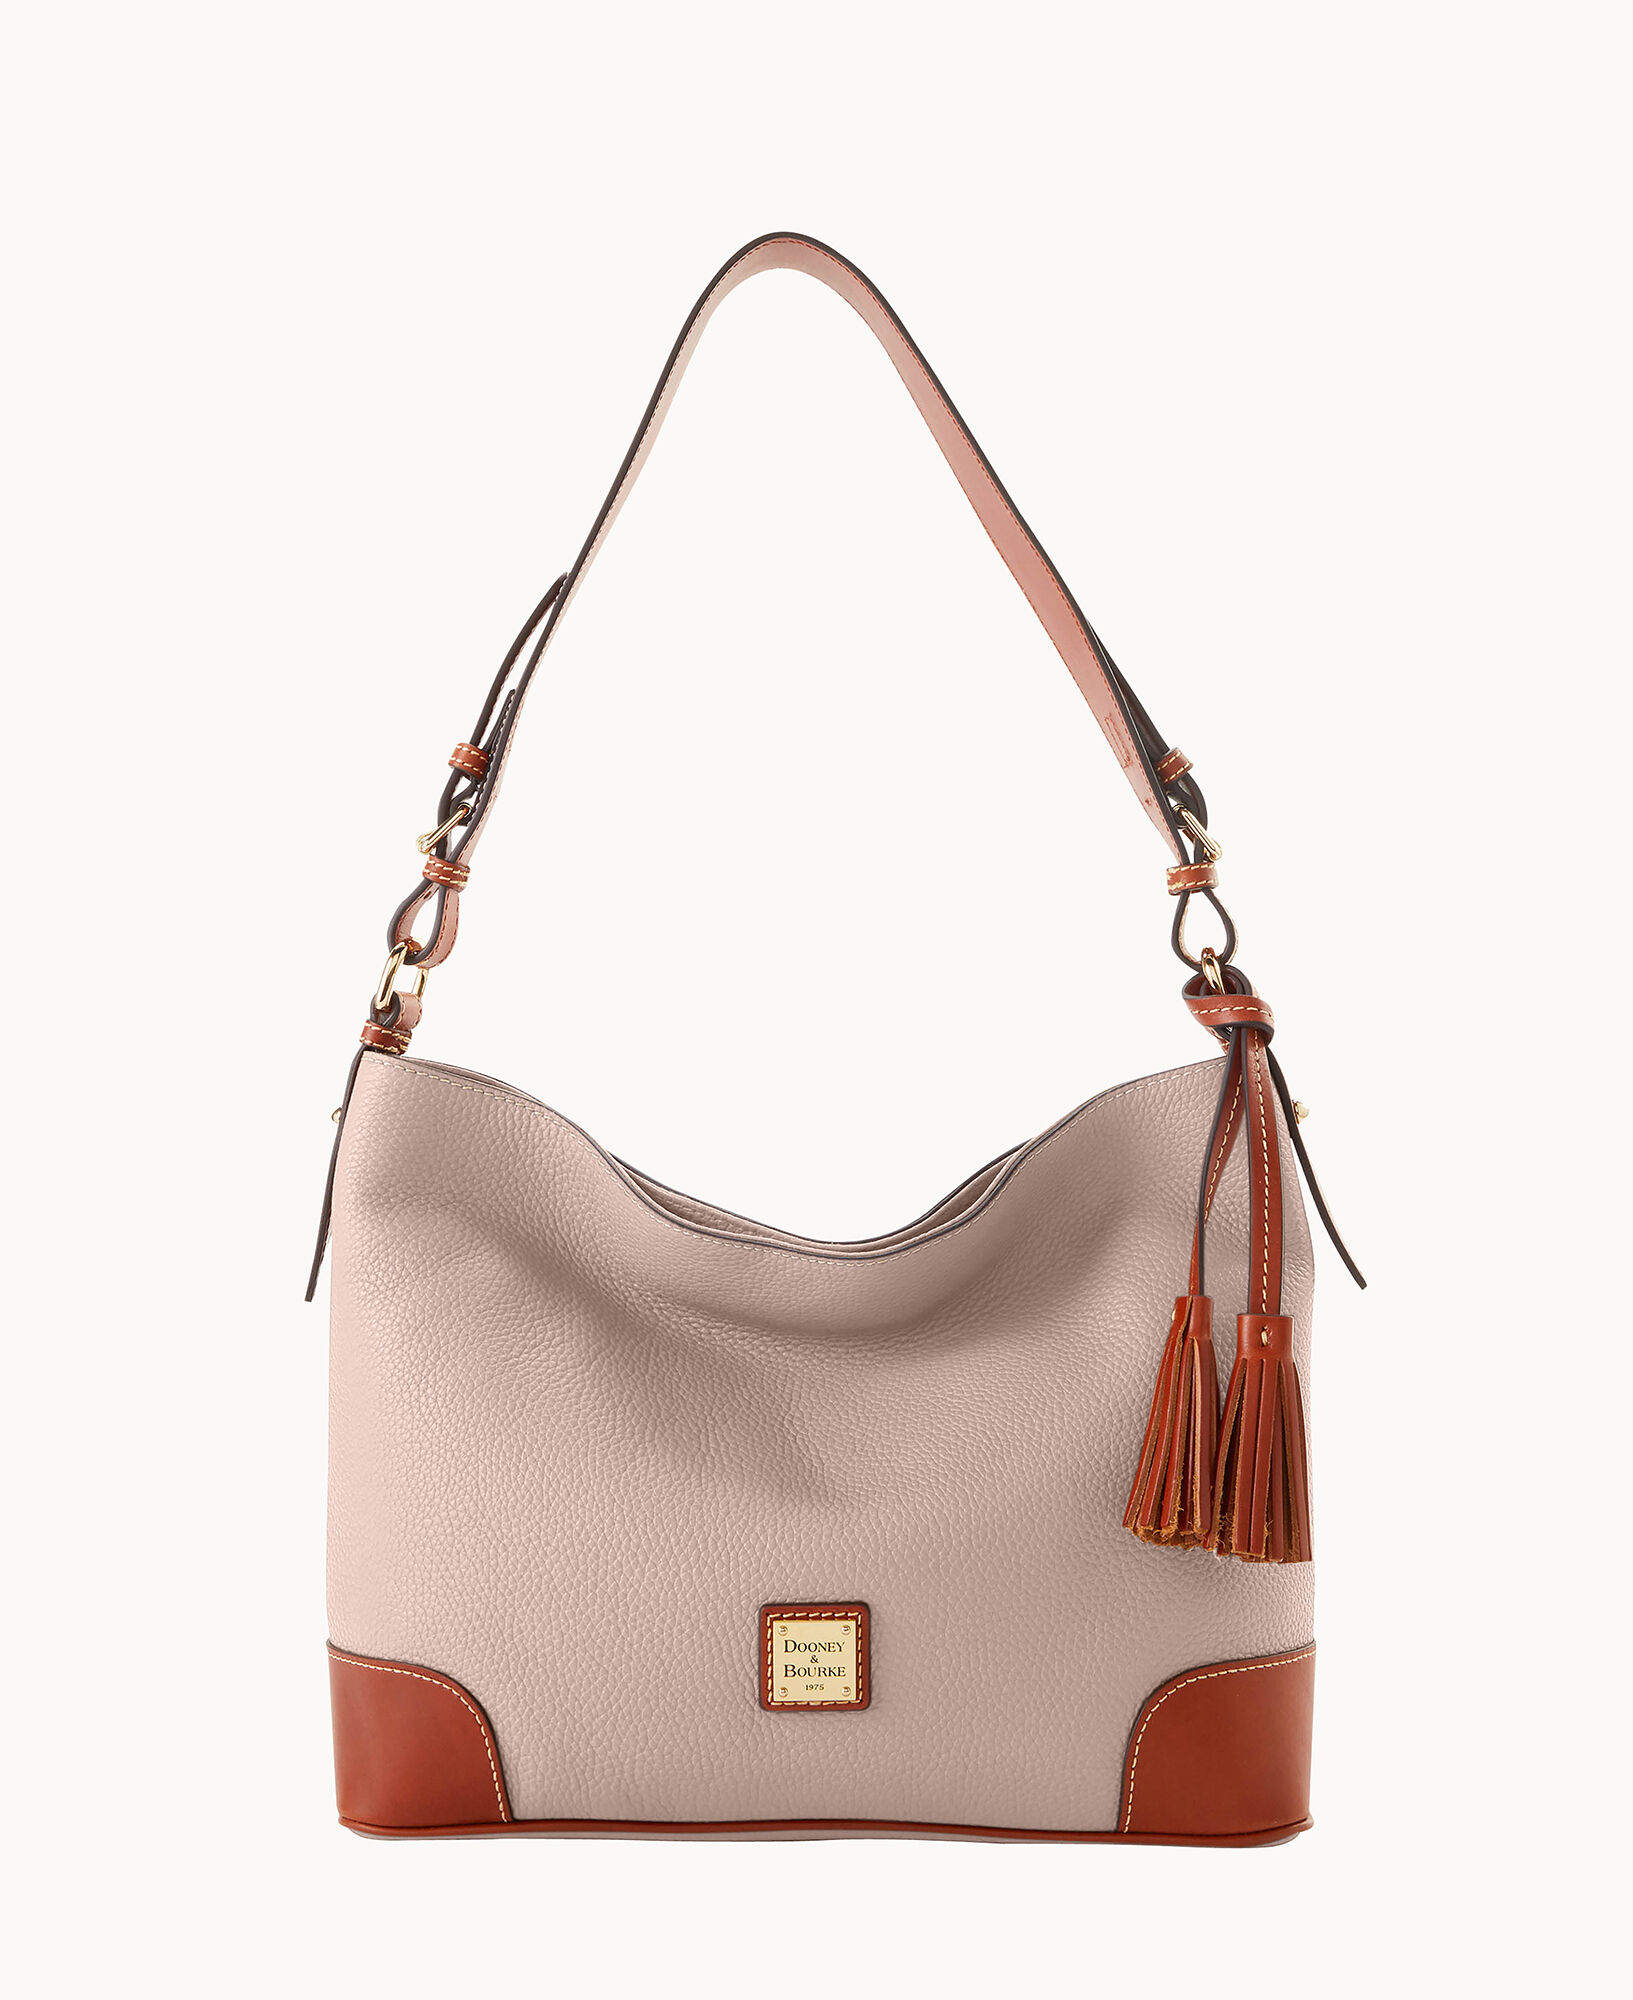 Shop The Pebble Grain Collection - Luxury Bags & Goods